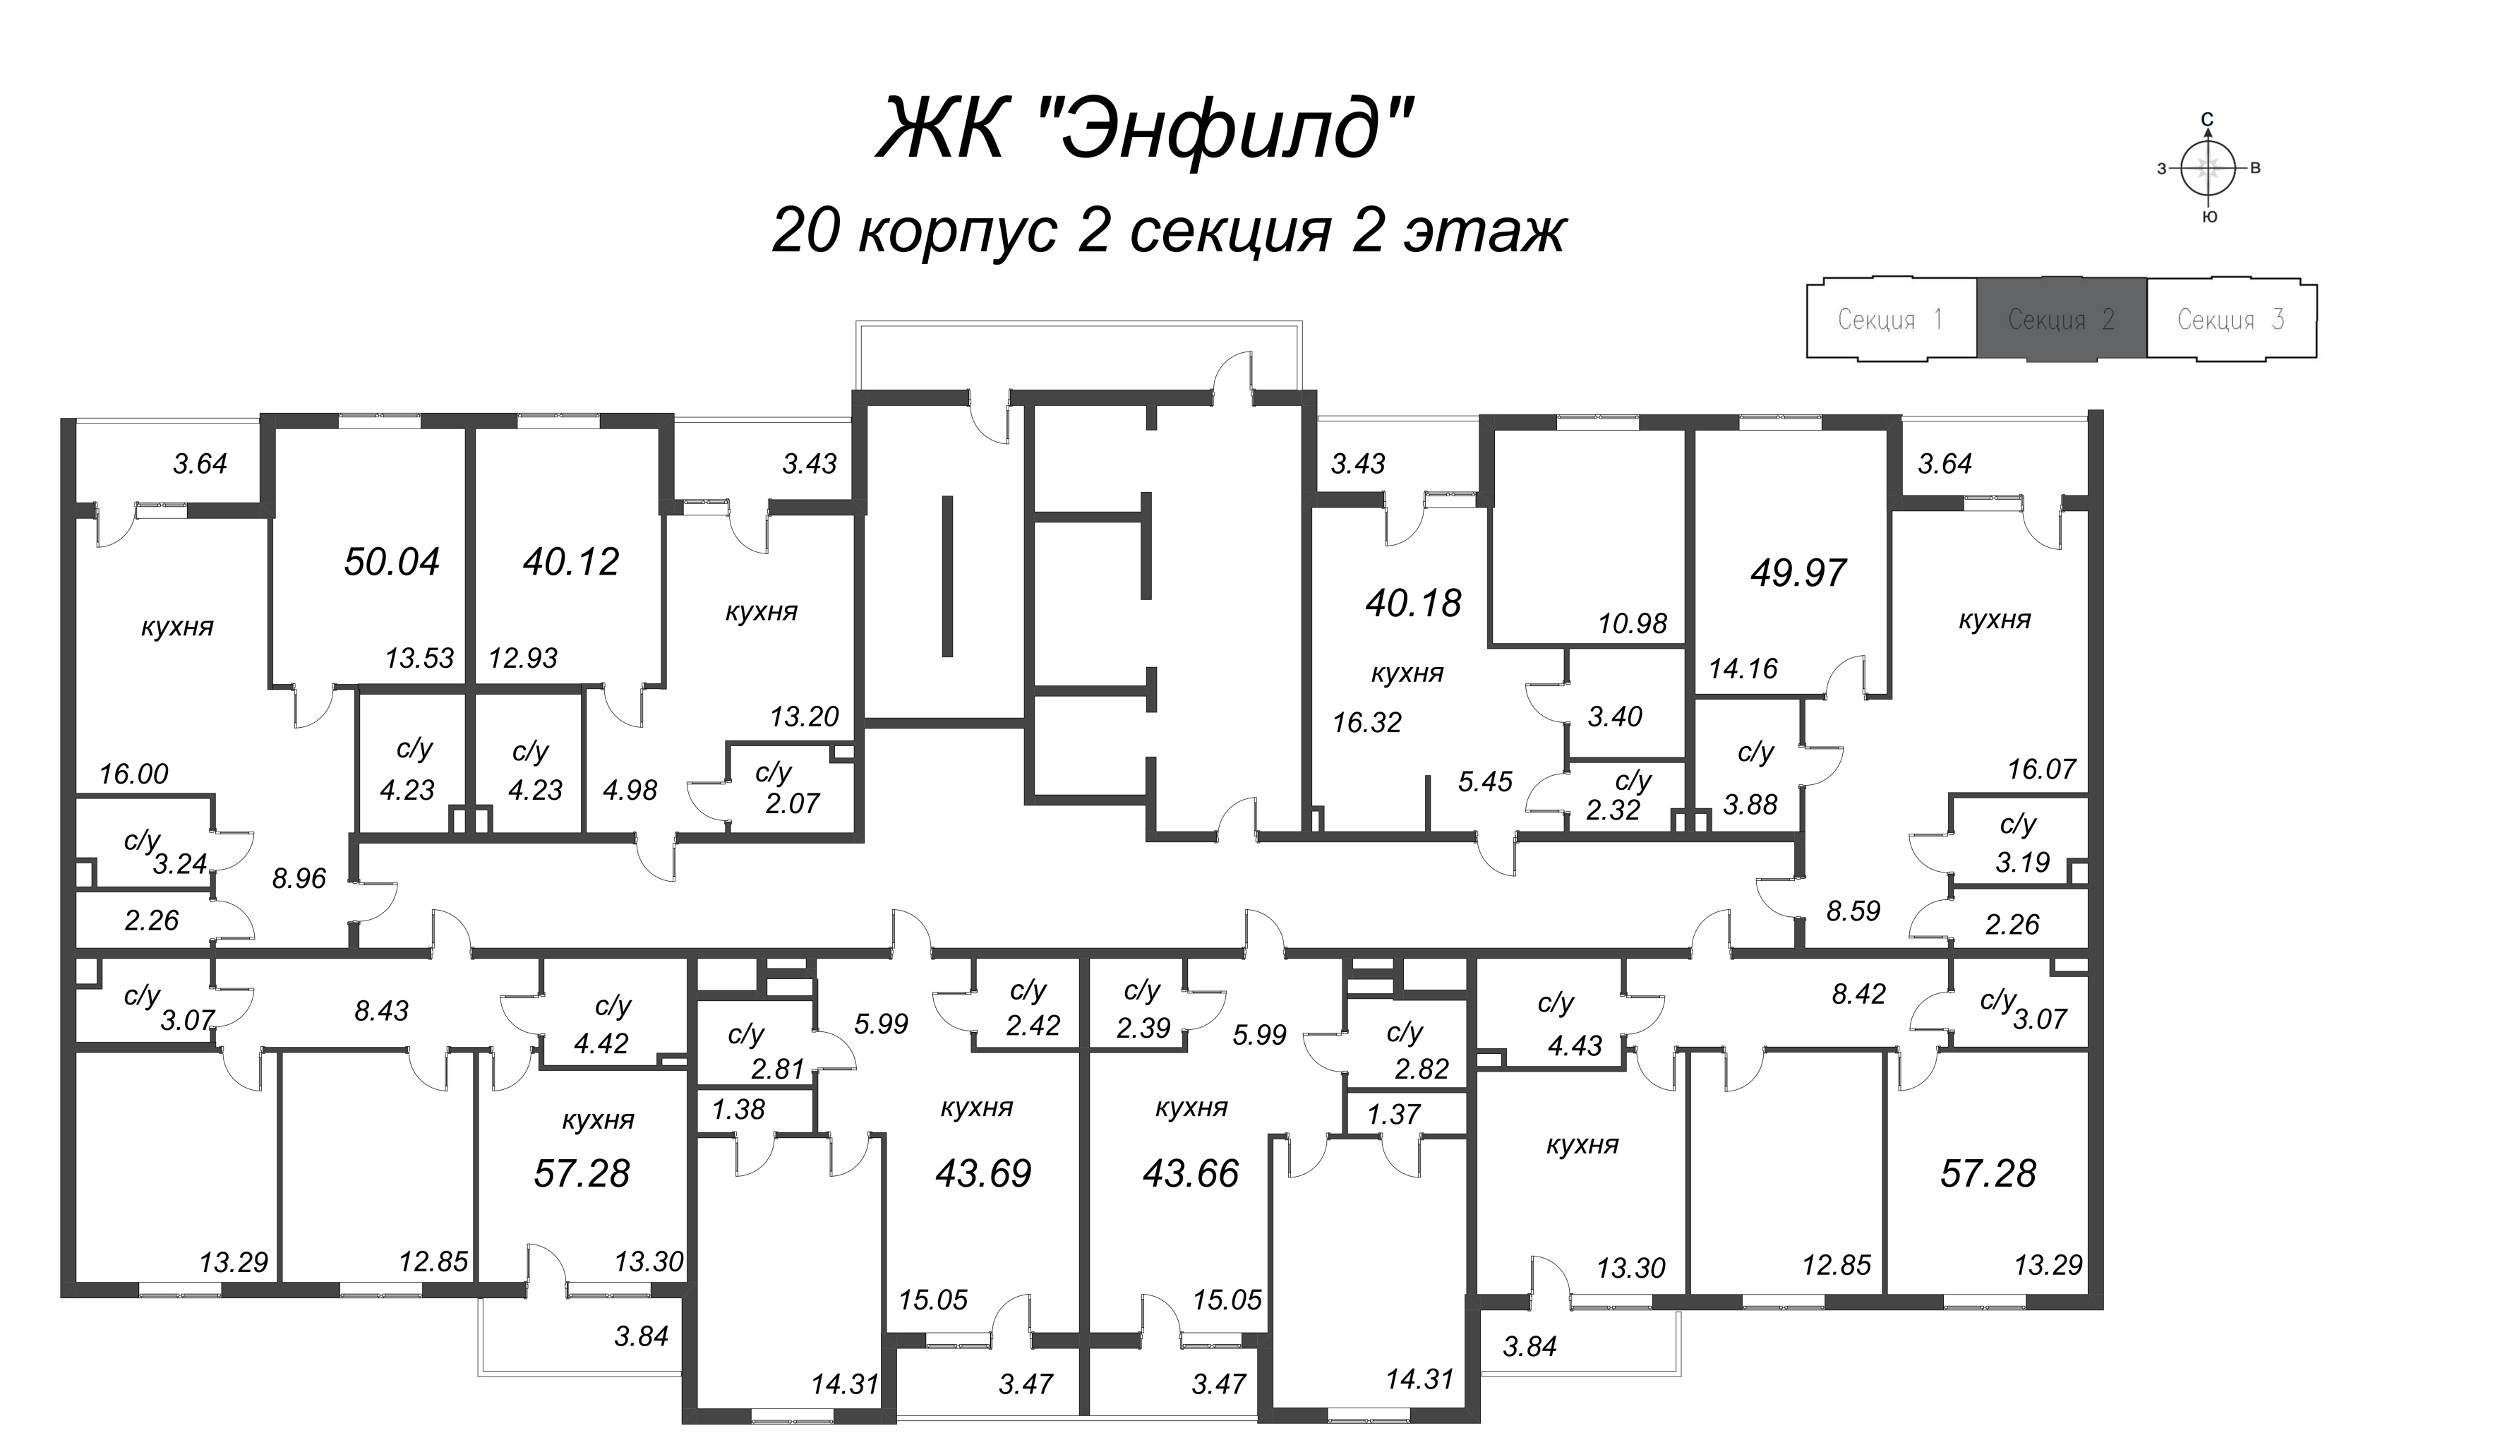 2-комнатная (Евро) квартира, 43.66 м² - планировка этажа